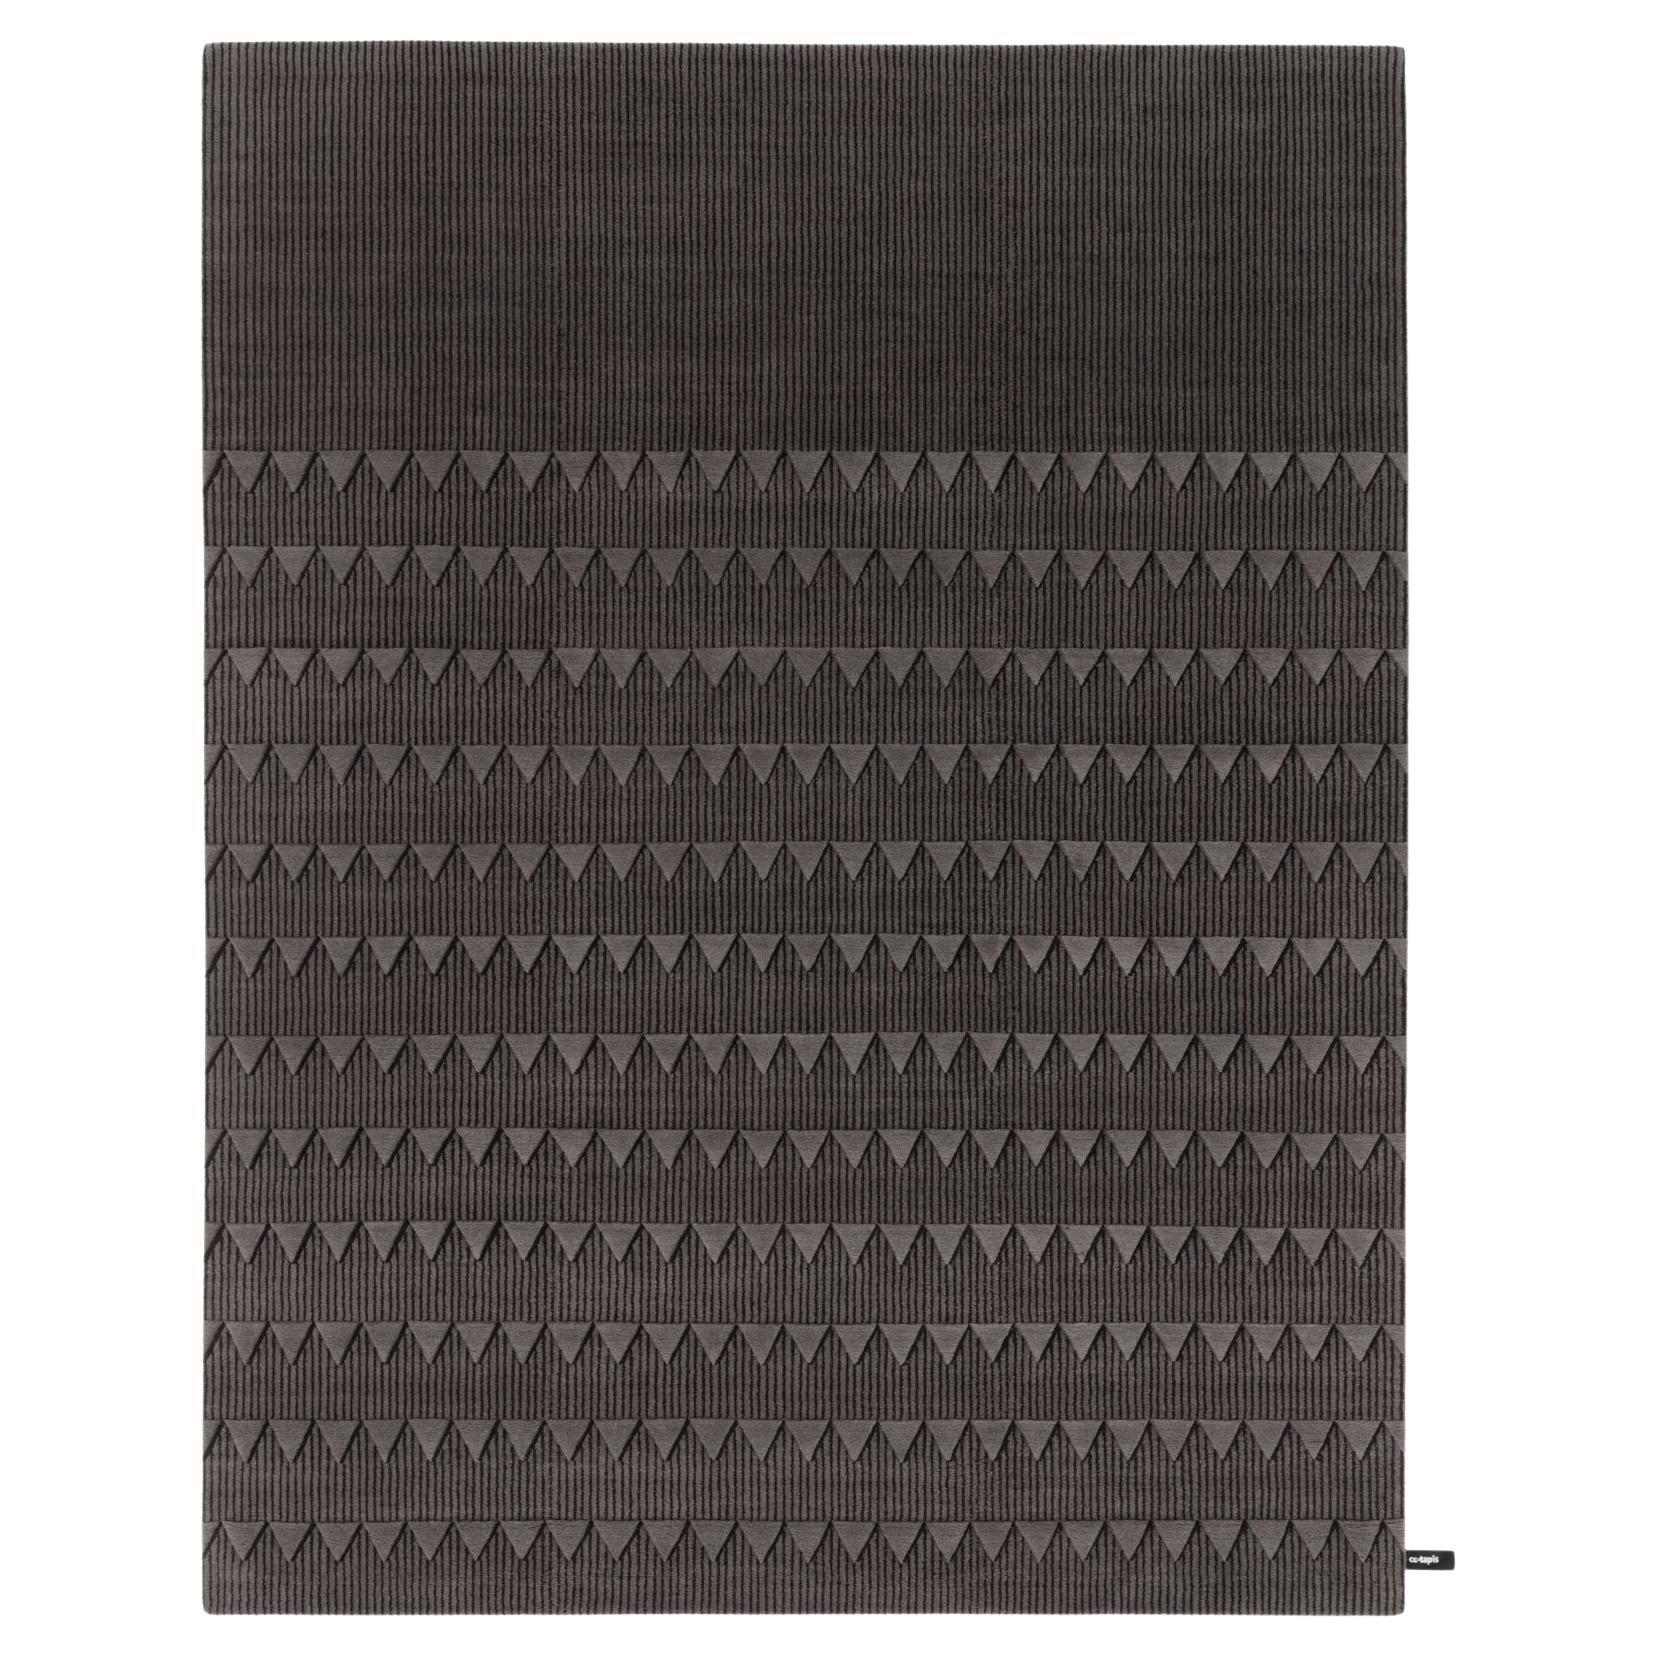 cc-tapis Le Tapis Plasterwork D Dark Standard Rug by David/Nicolas For Sale